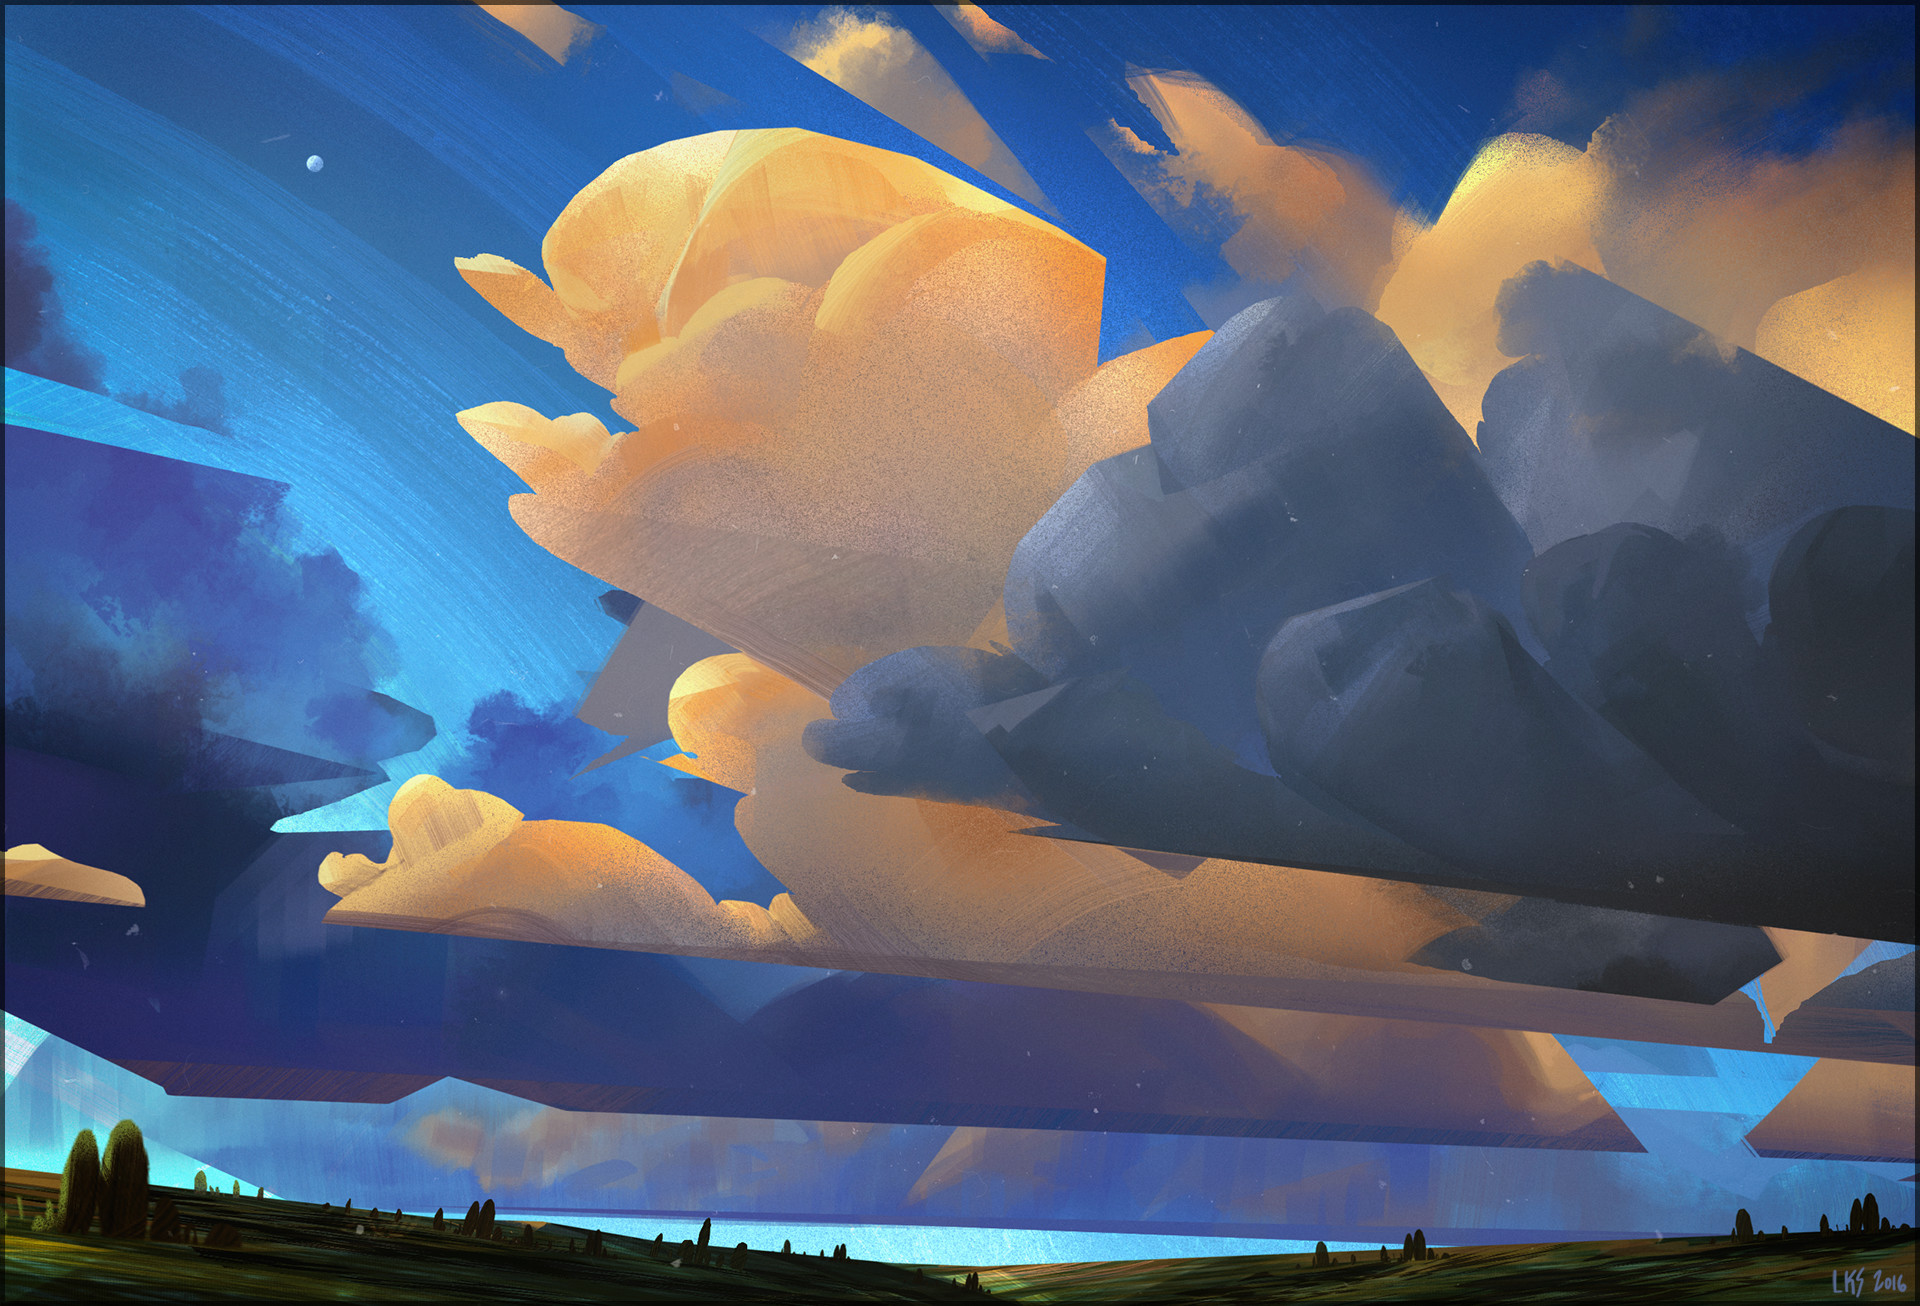 liam-smyth-clouds-study-by-wendallhitherd-datmuxj.jpg?1502868178